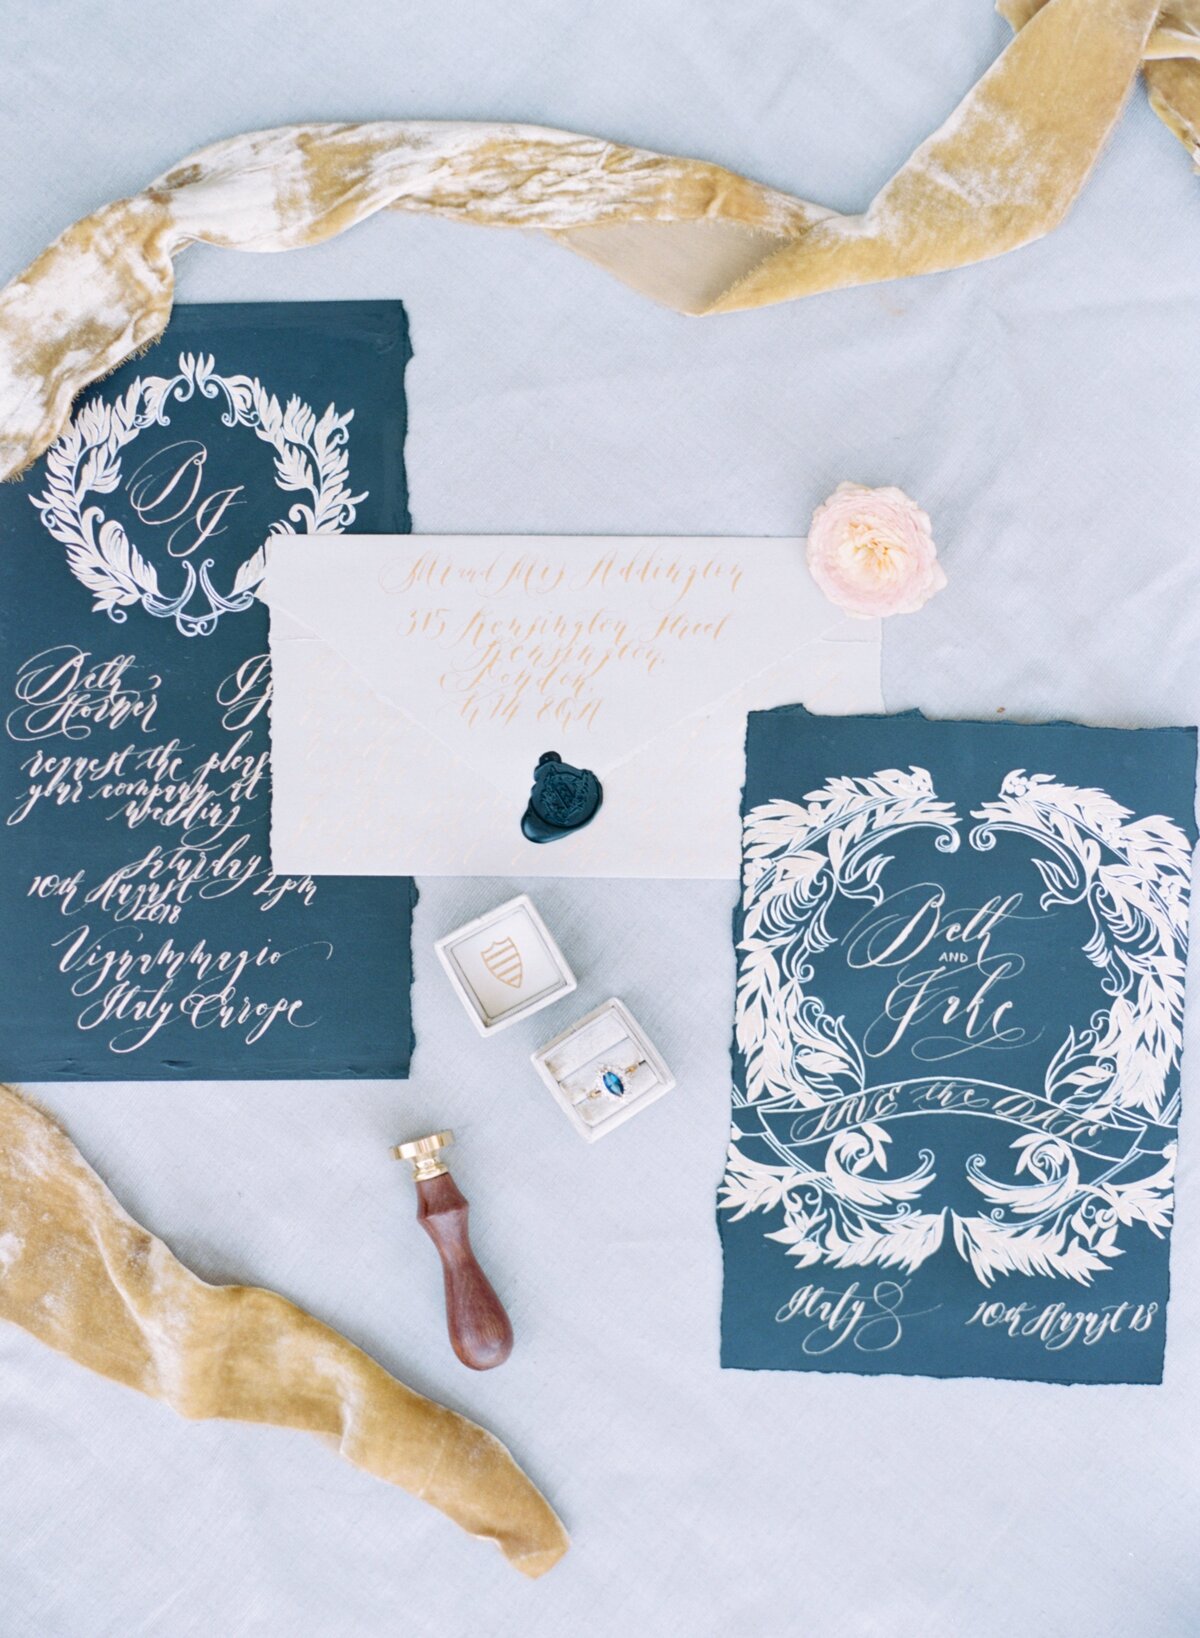 detail shot of wedding invitation, rings, hand written vows